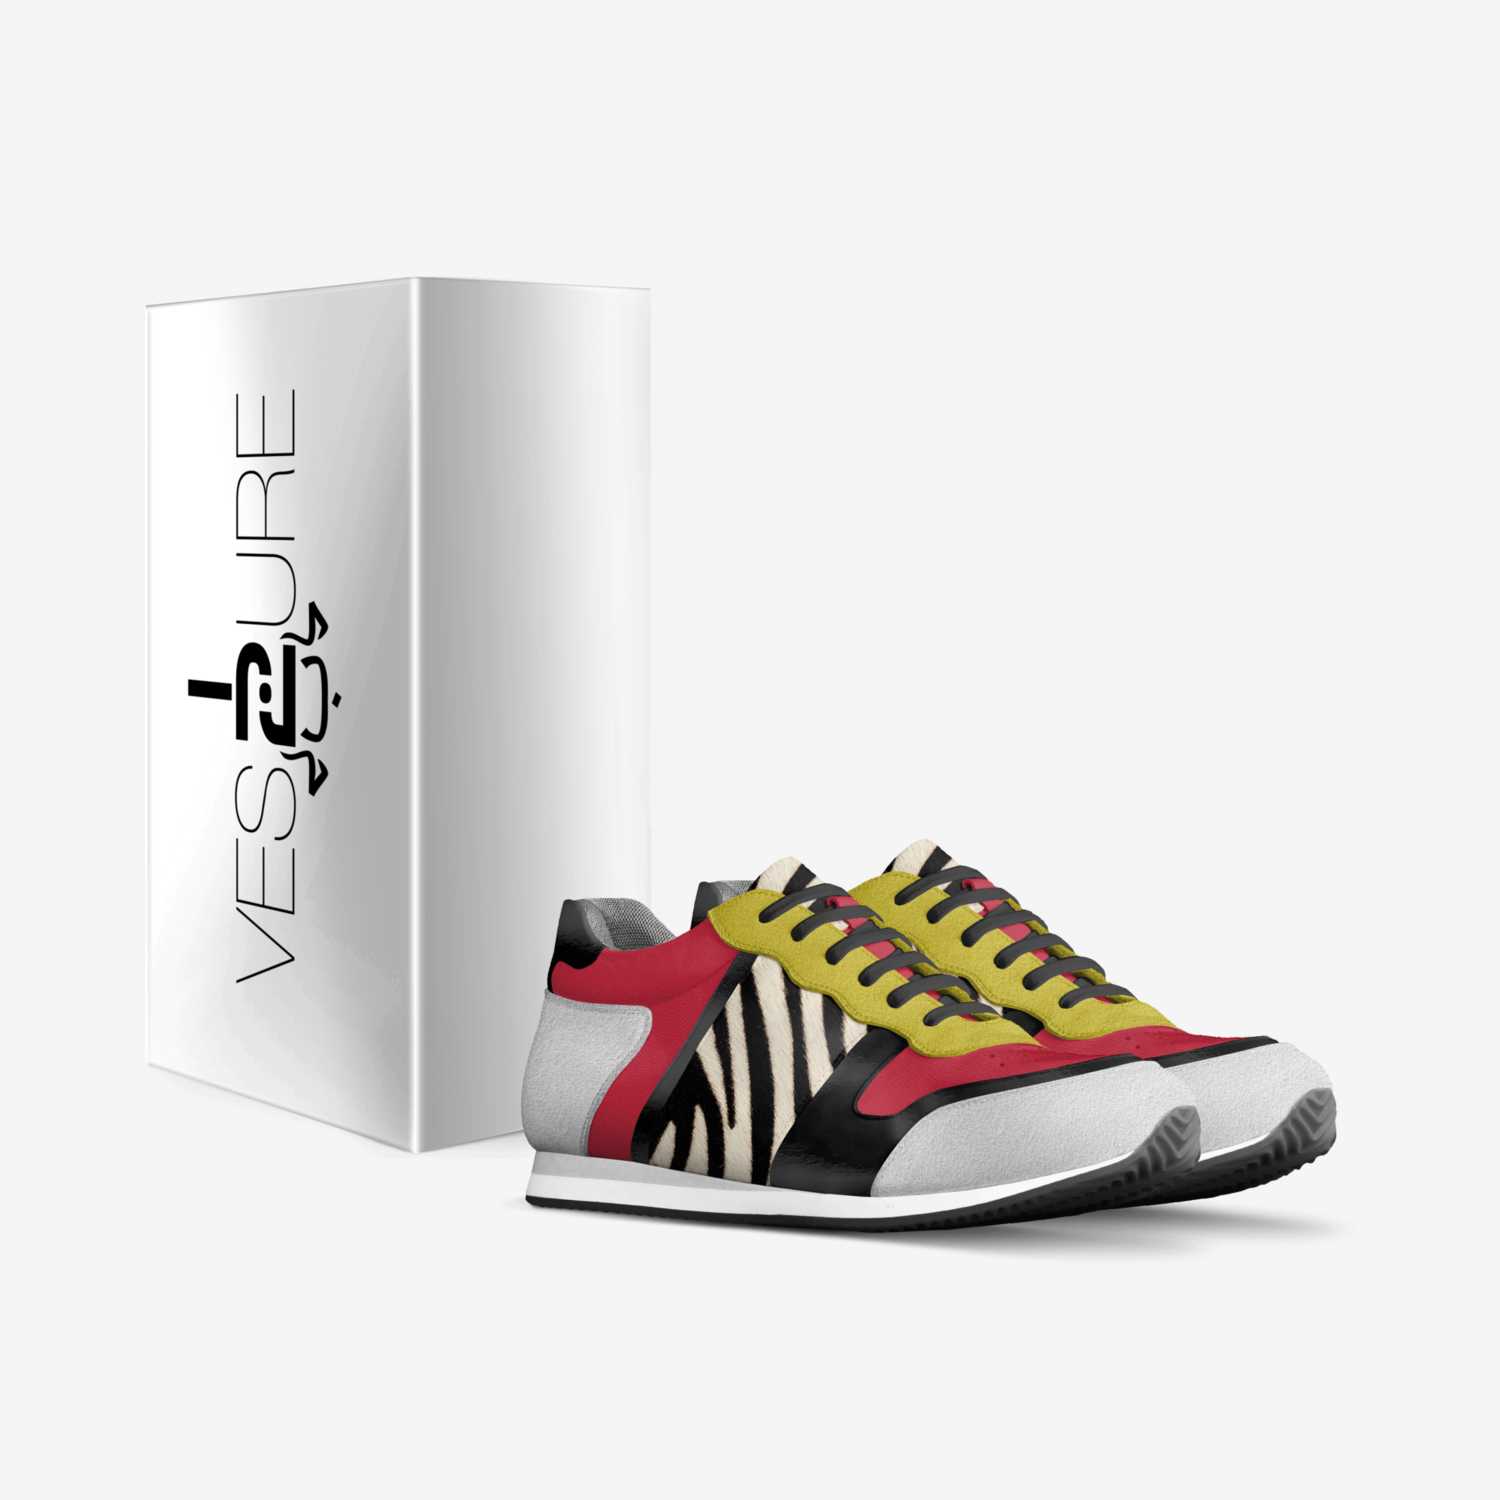 Ves2ure 20 custom made in Italy shoes by Jordan Warren Jr | Box view